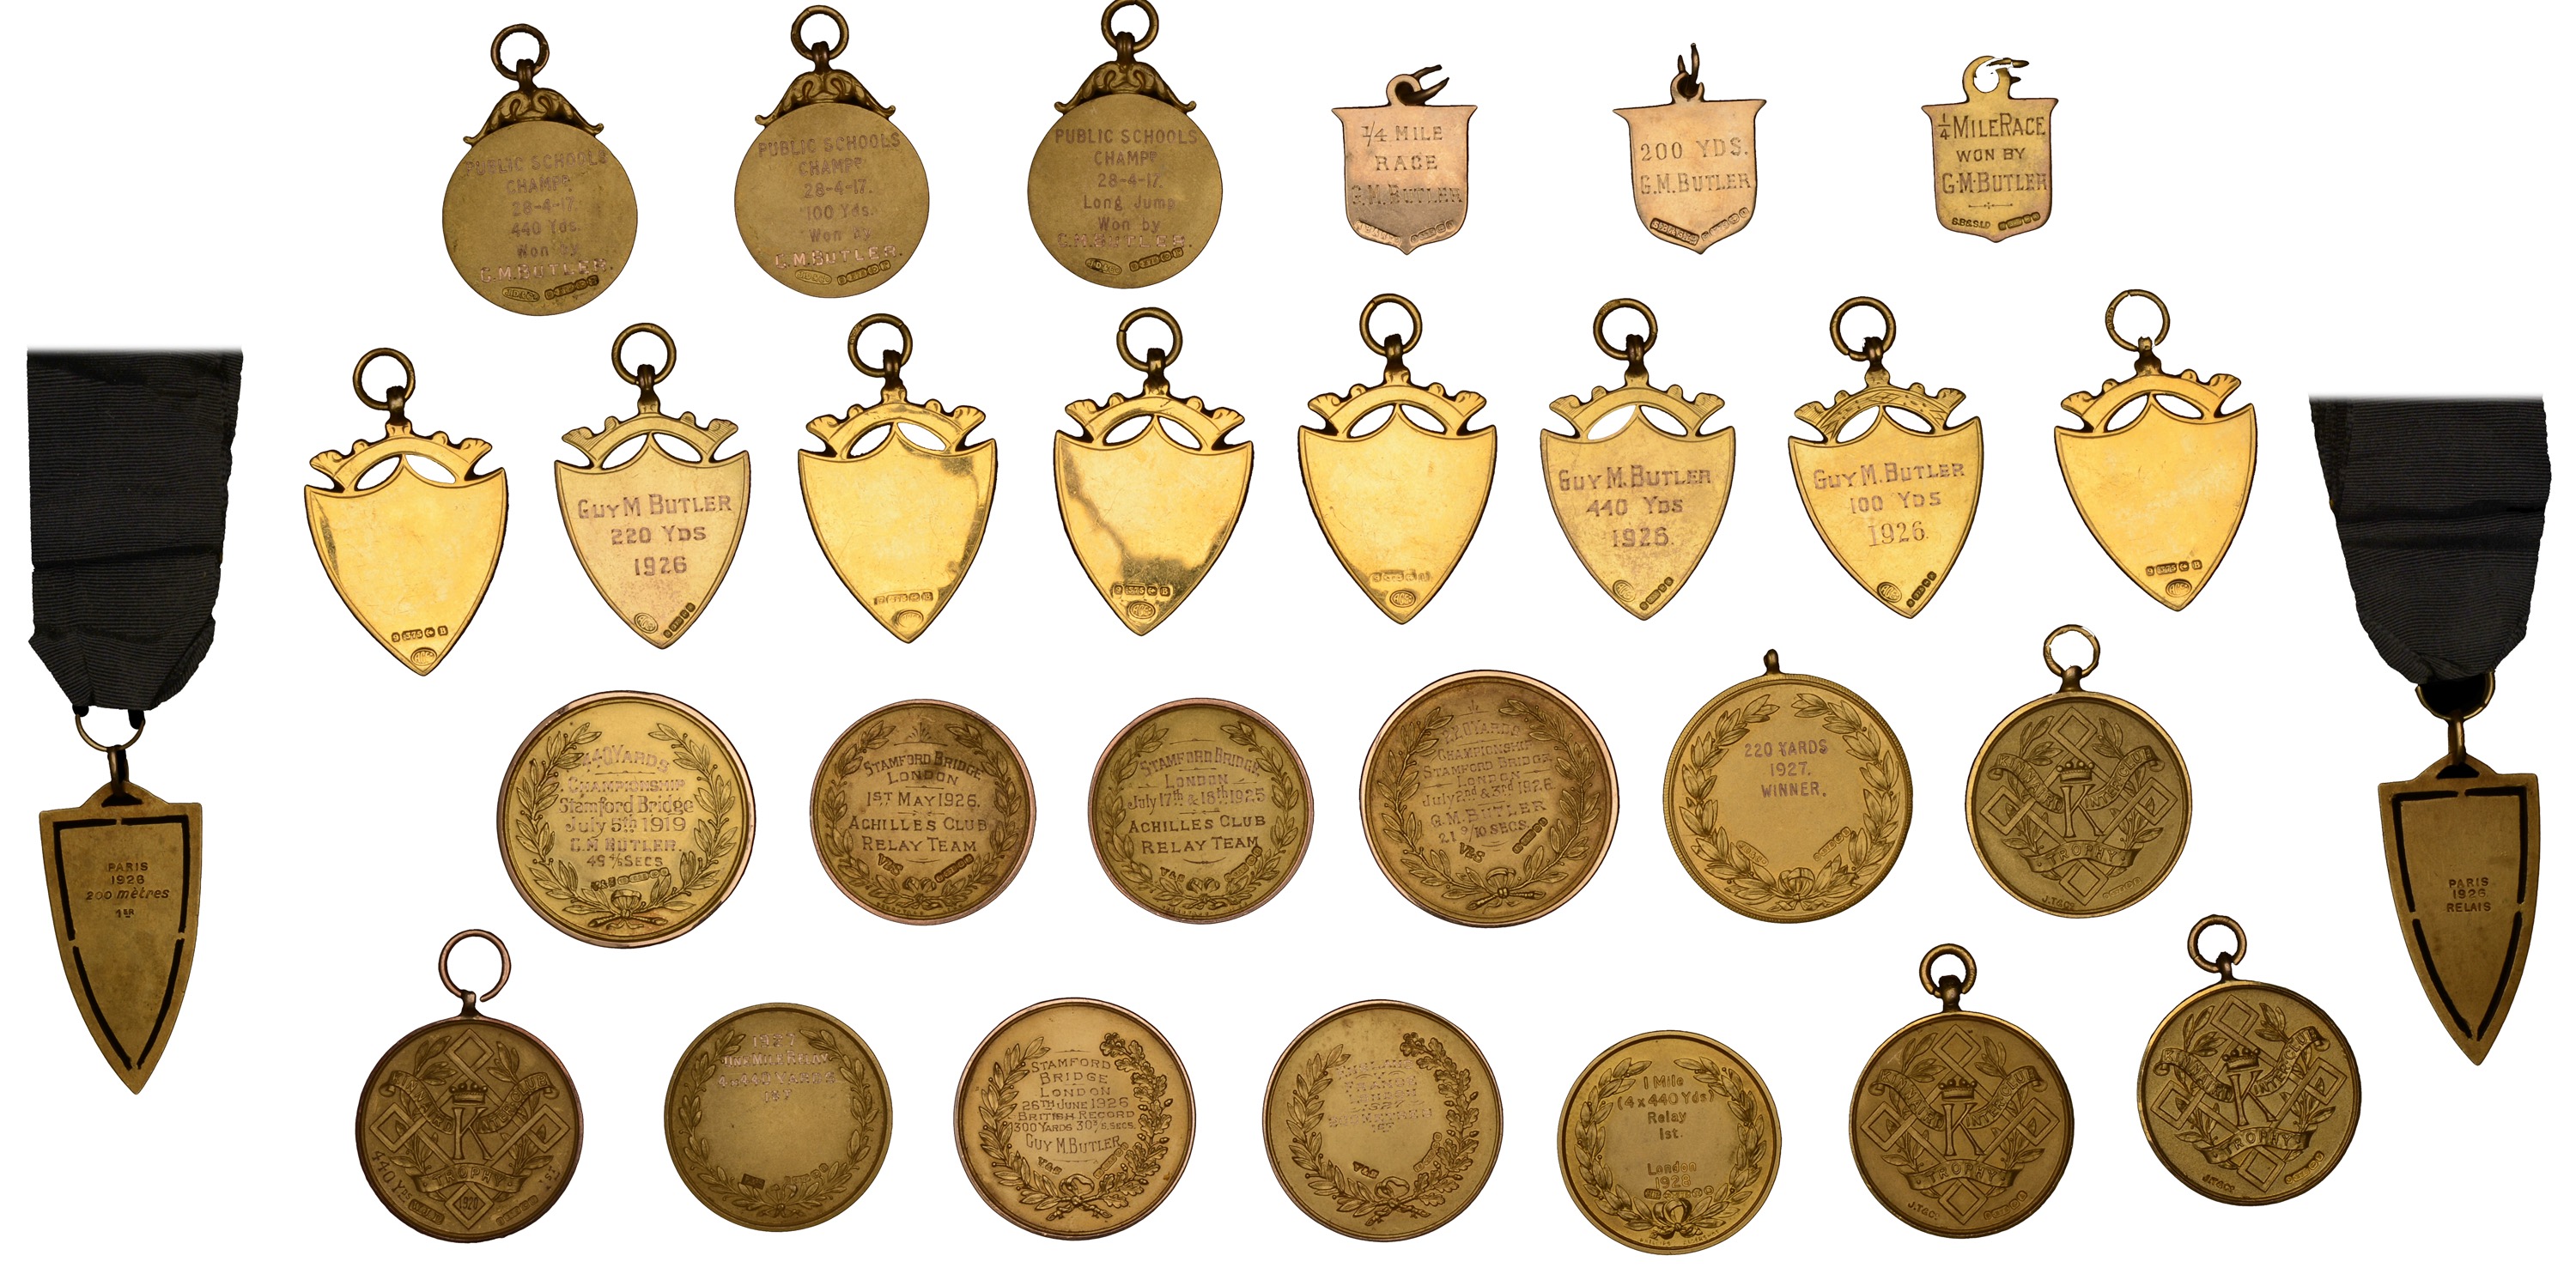 London Athletic Club, a gold award medal by J. Daffern & Co, named (Public Schools Champp.,... - Image 4 of 7